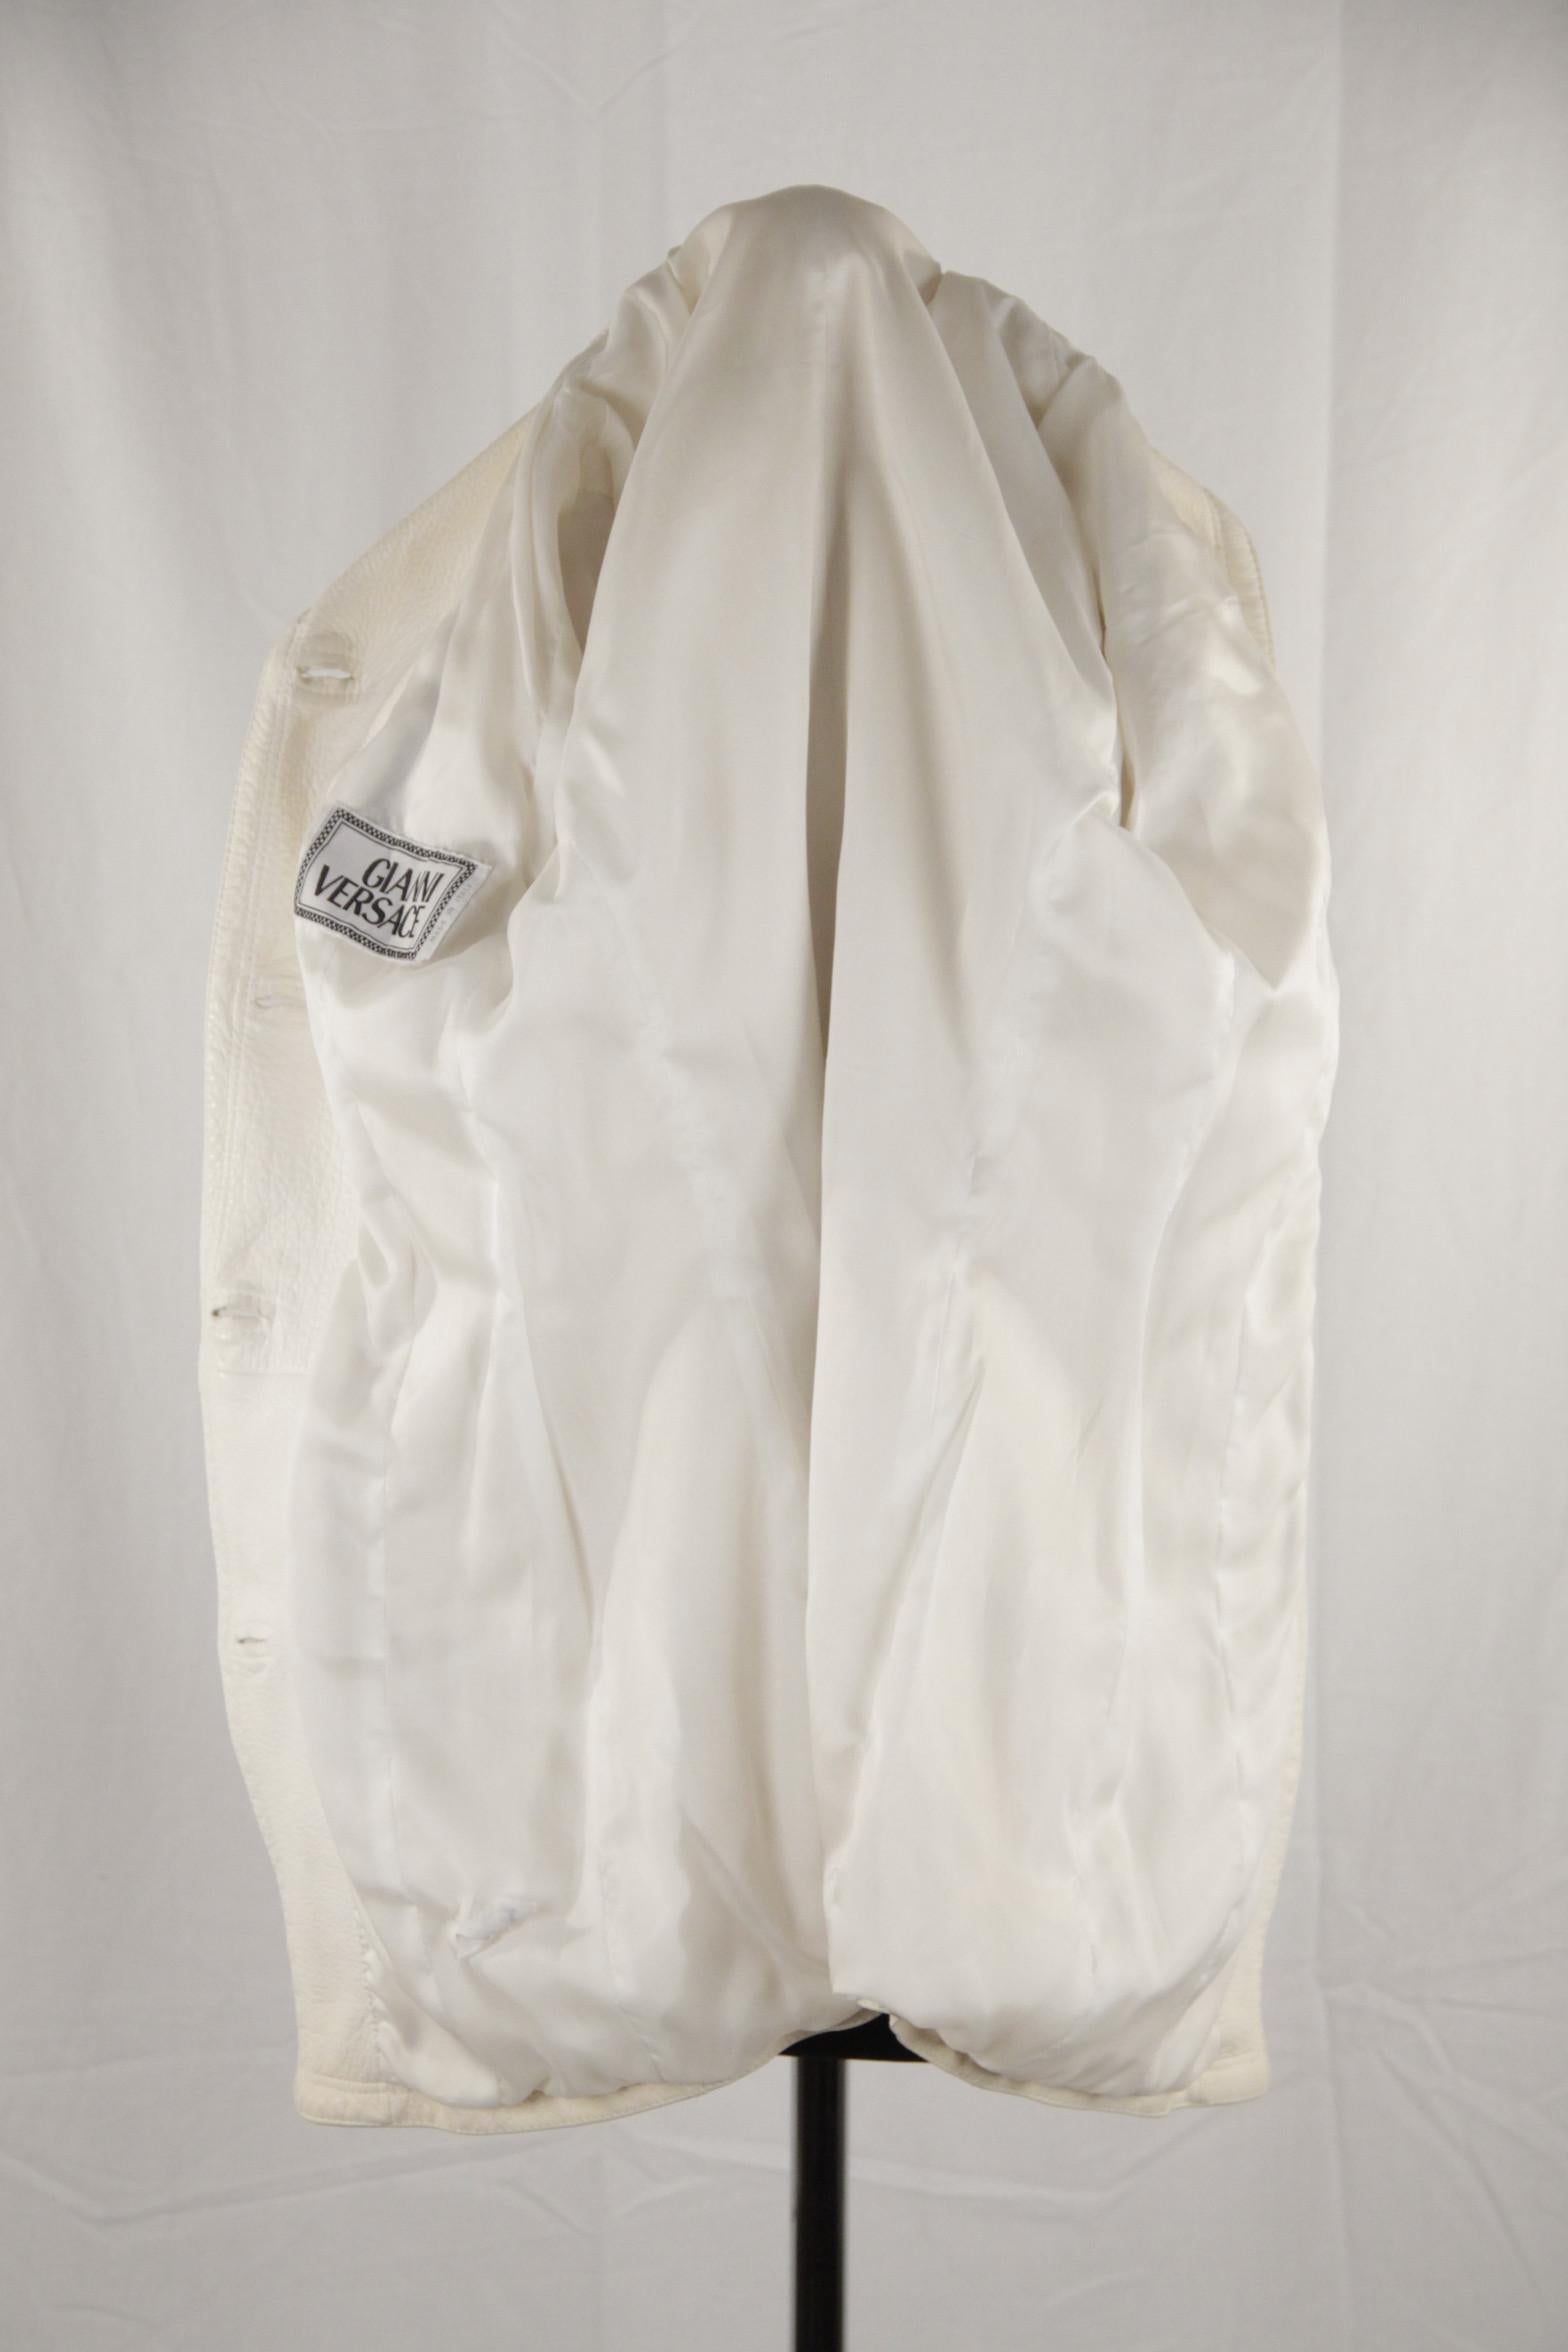 Gianni Versace Vintage White Leather Jacket with Medusa Details 1